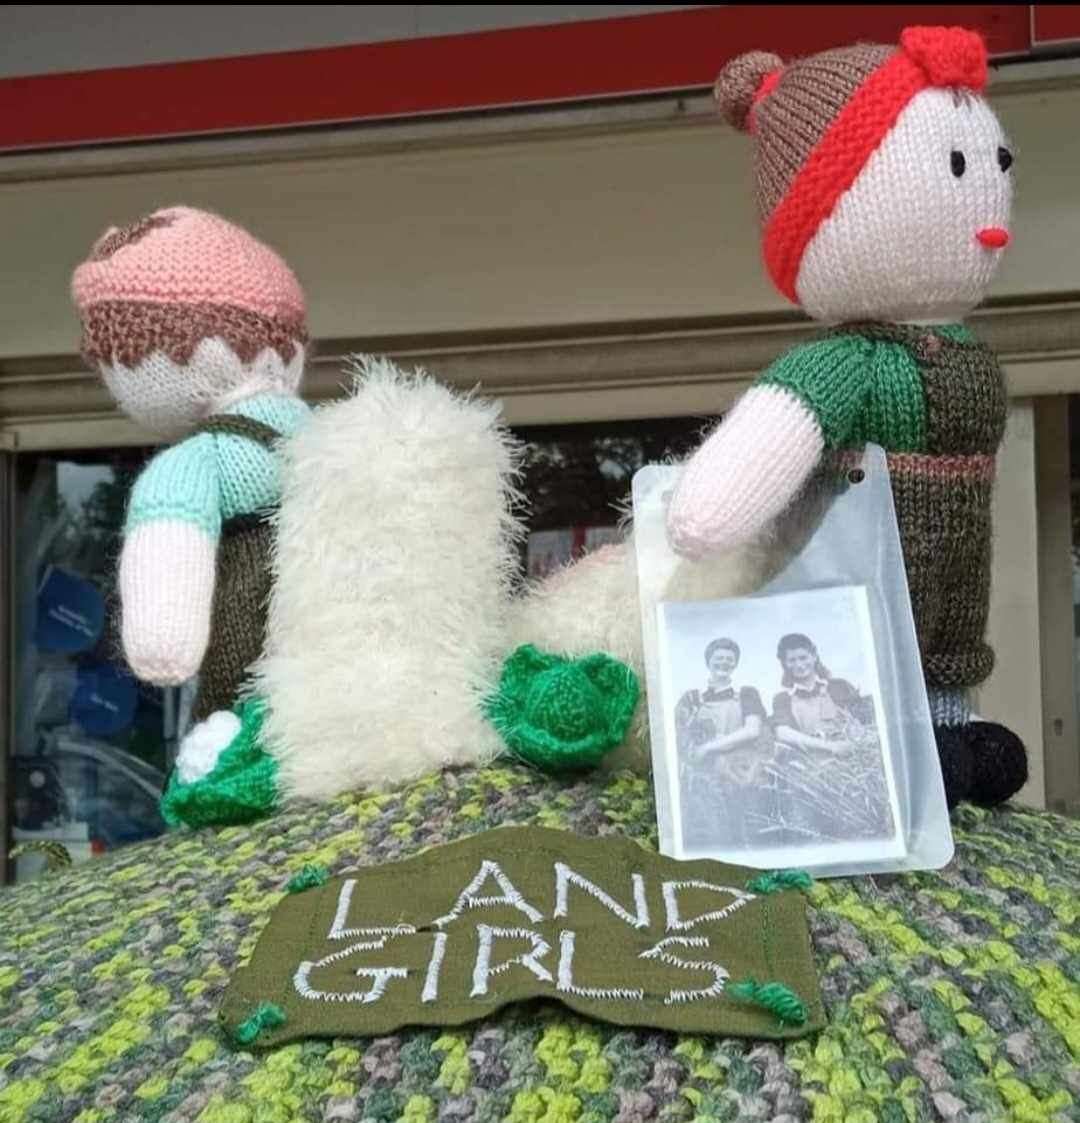 A Land Girls topper made by the group (Yarn Bomb Hemel Hempstead/PA)